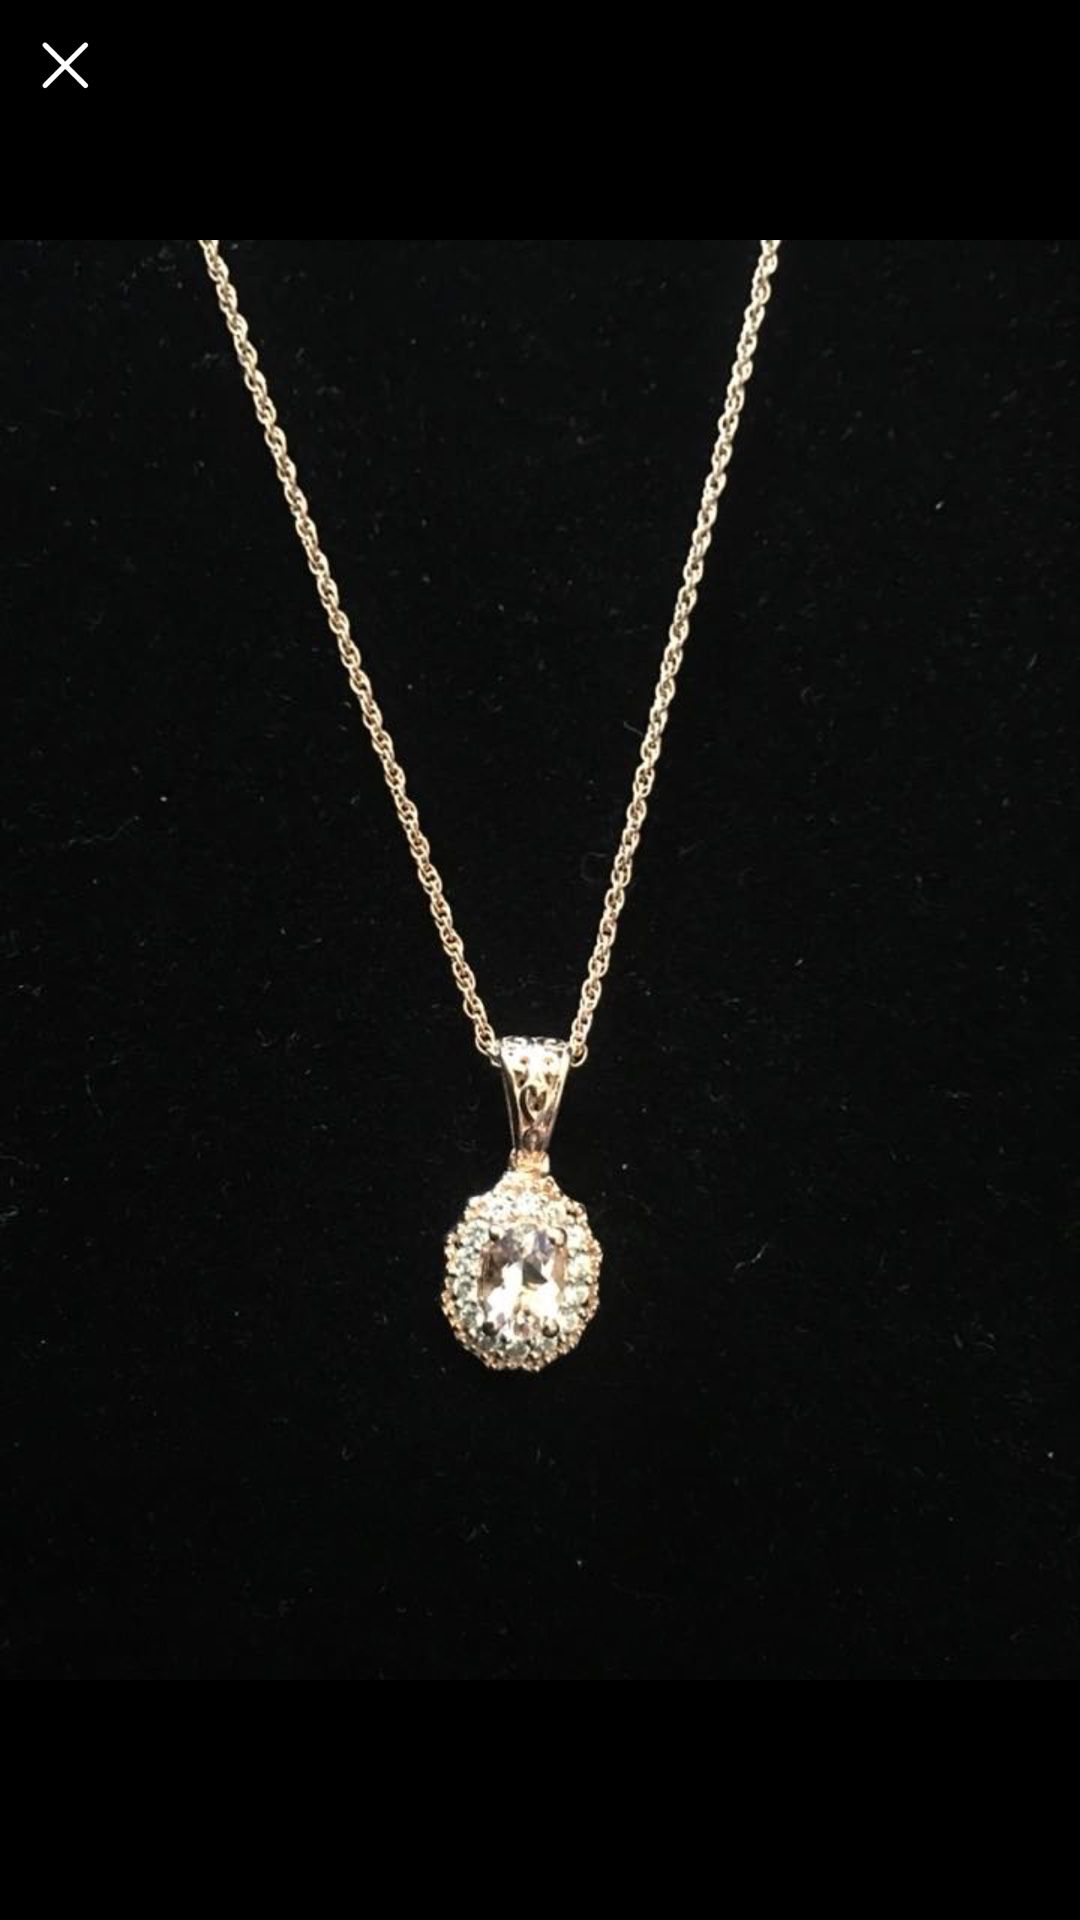 Morganite necklace - rose gold coated over sterling silver